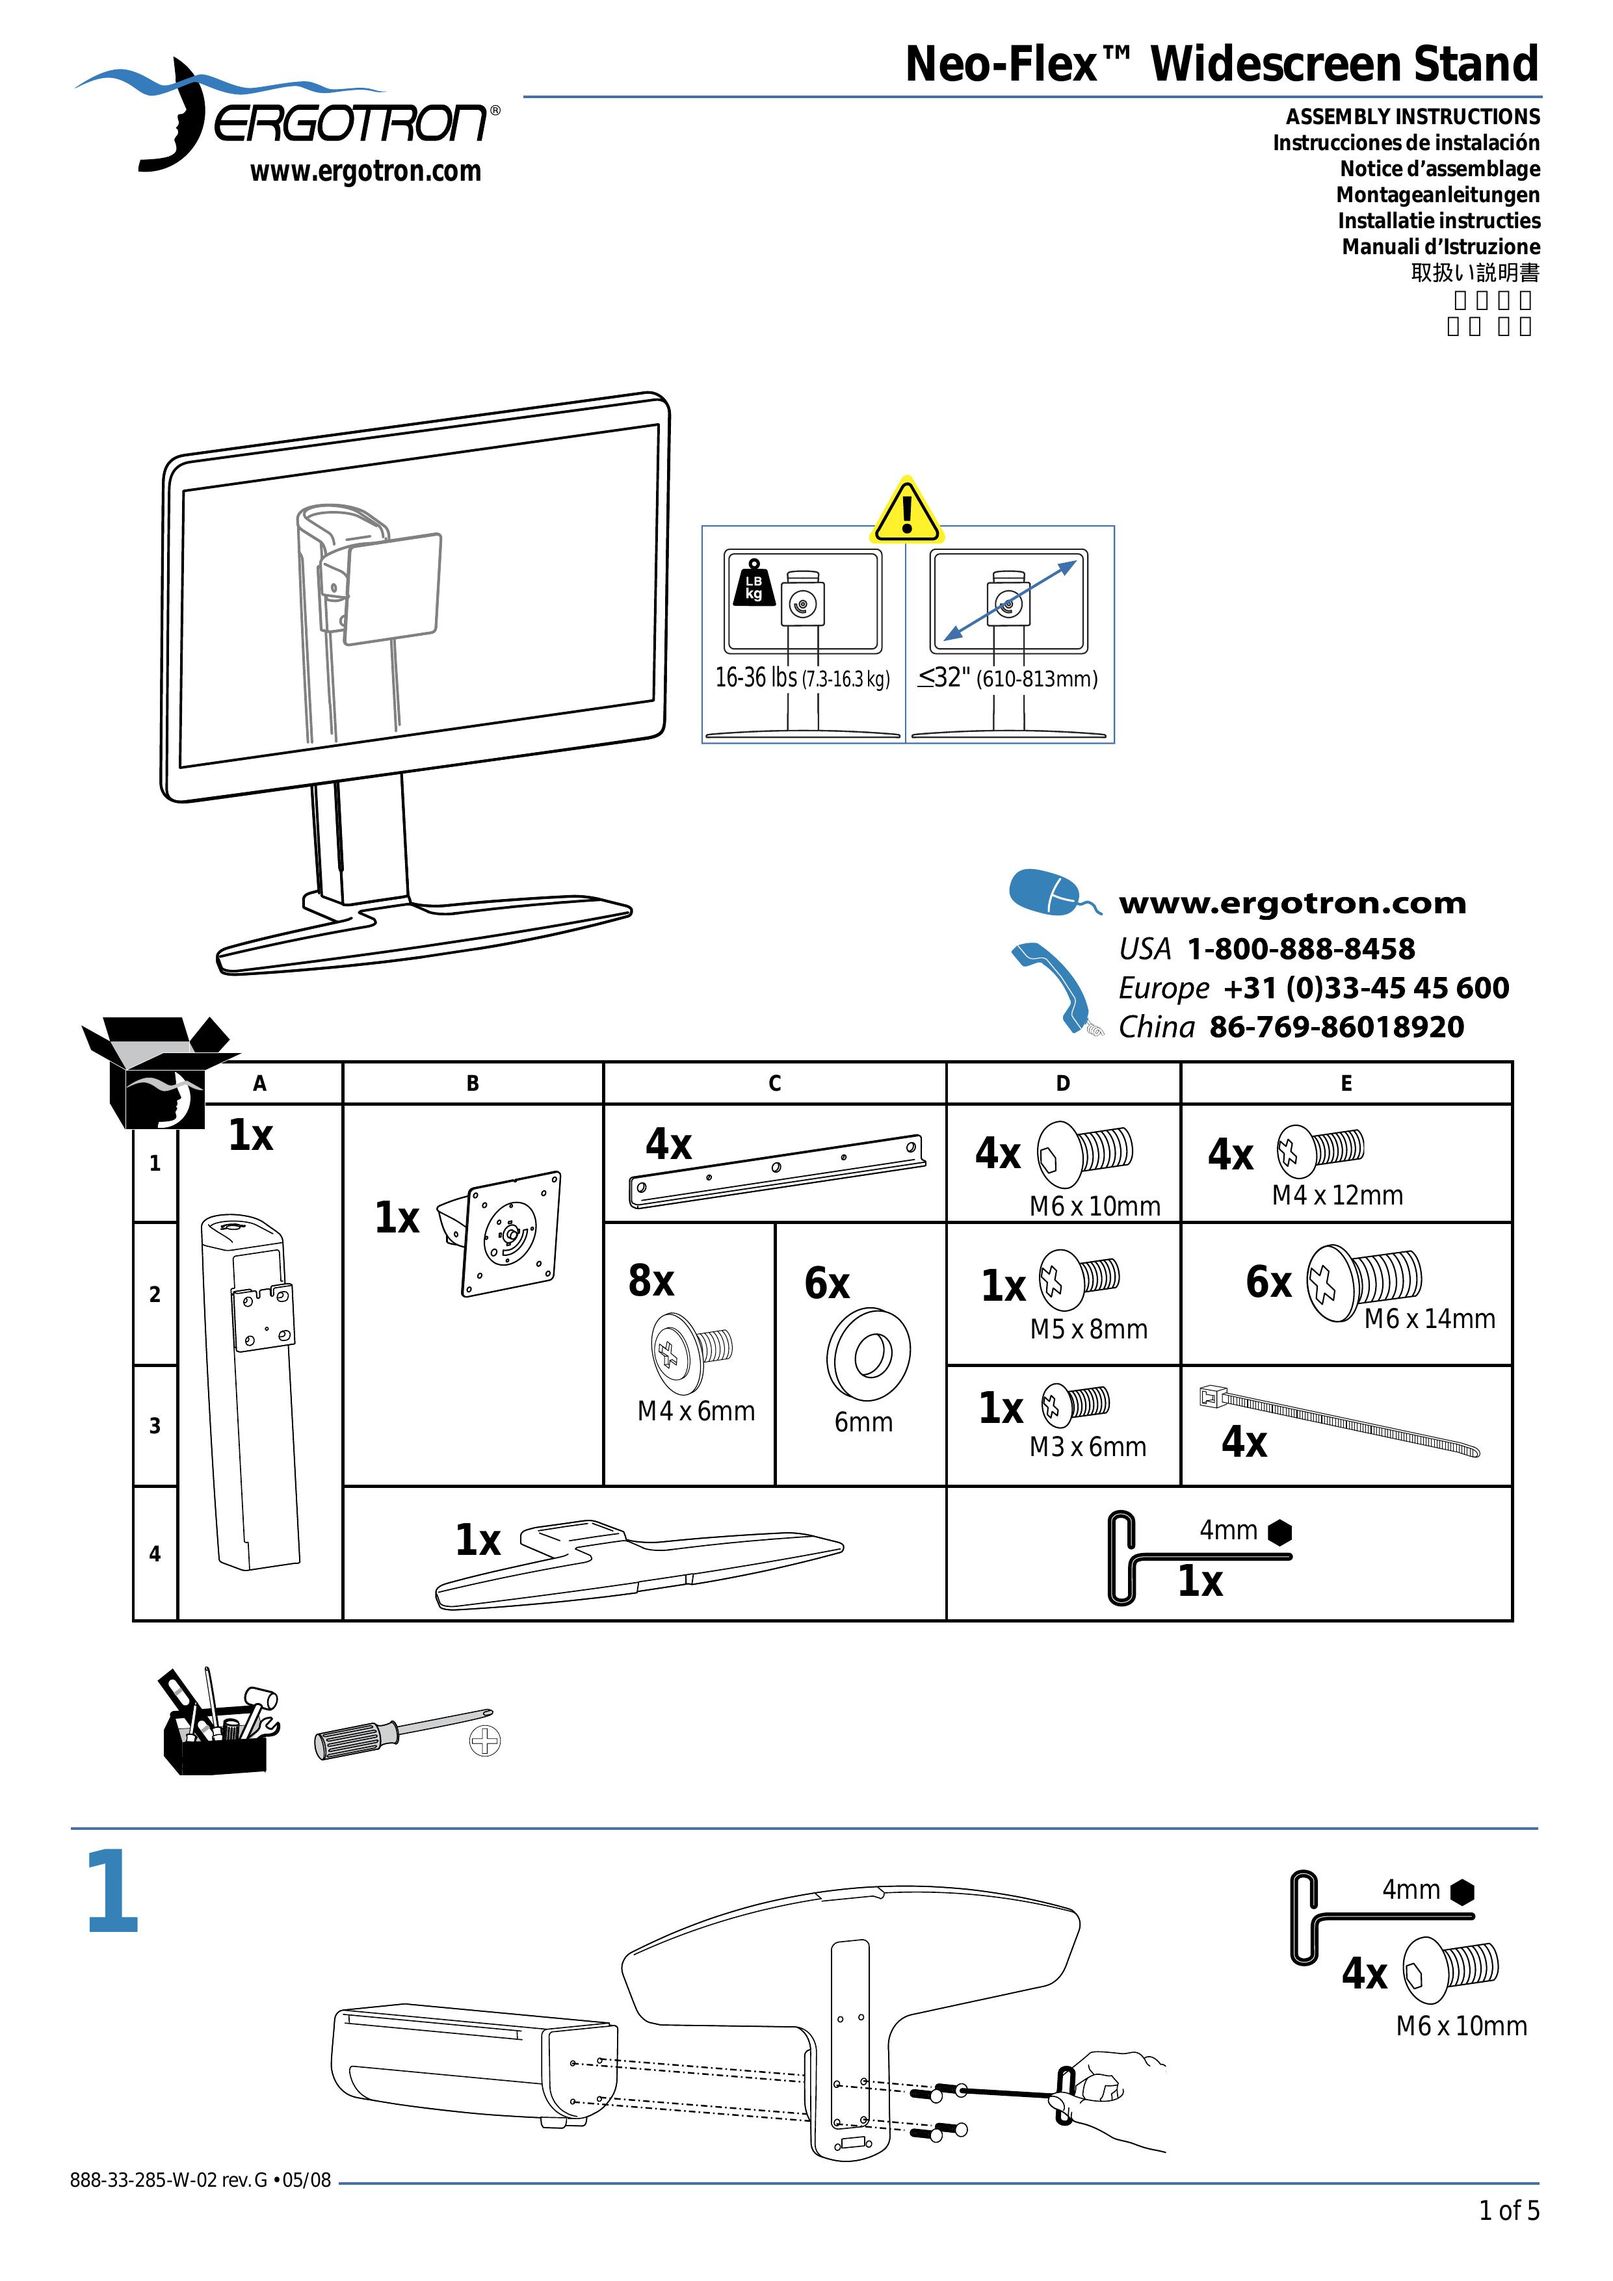 Ergotron Widescreen Stand Indoor Furnishings User Manual